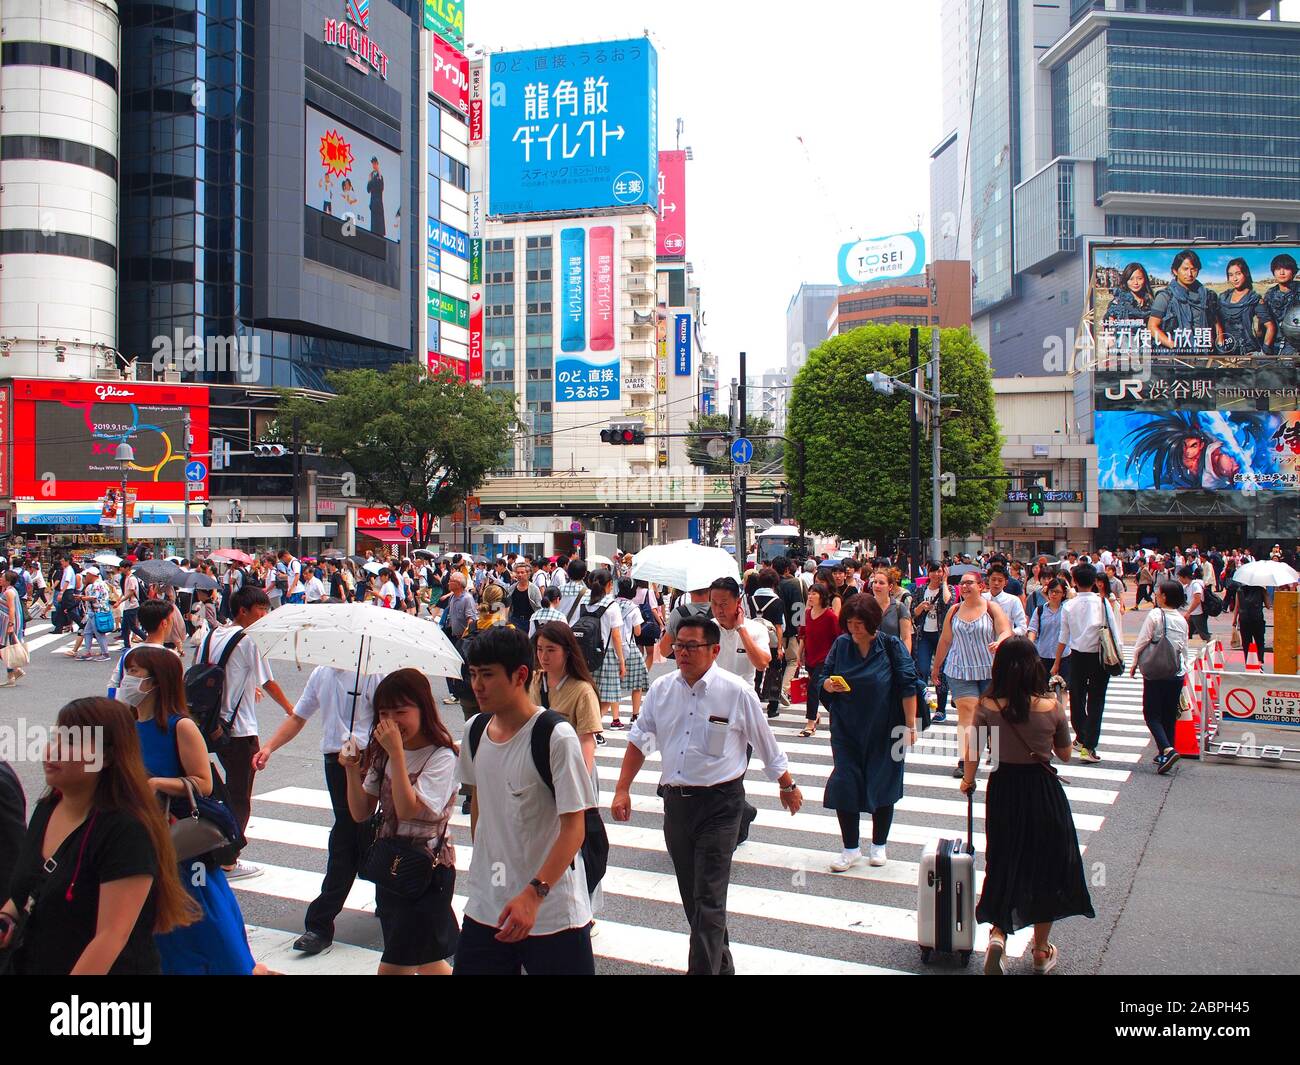 SHIBUYA, TOKYO, JAPAN - August 2nd, 2019: Shibuya crossing with lots of pedestrians. The Shibuya crossing is a popular travel destination. Stock Photo